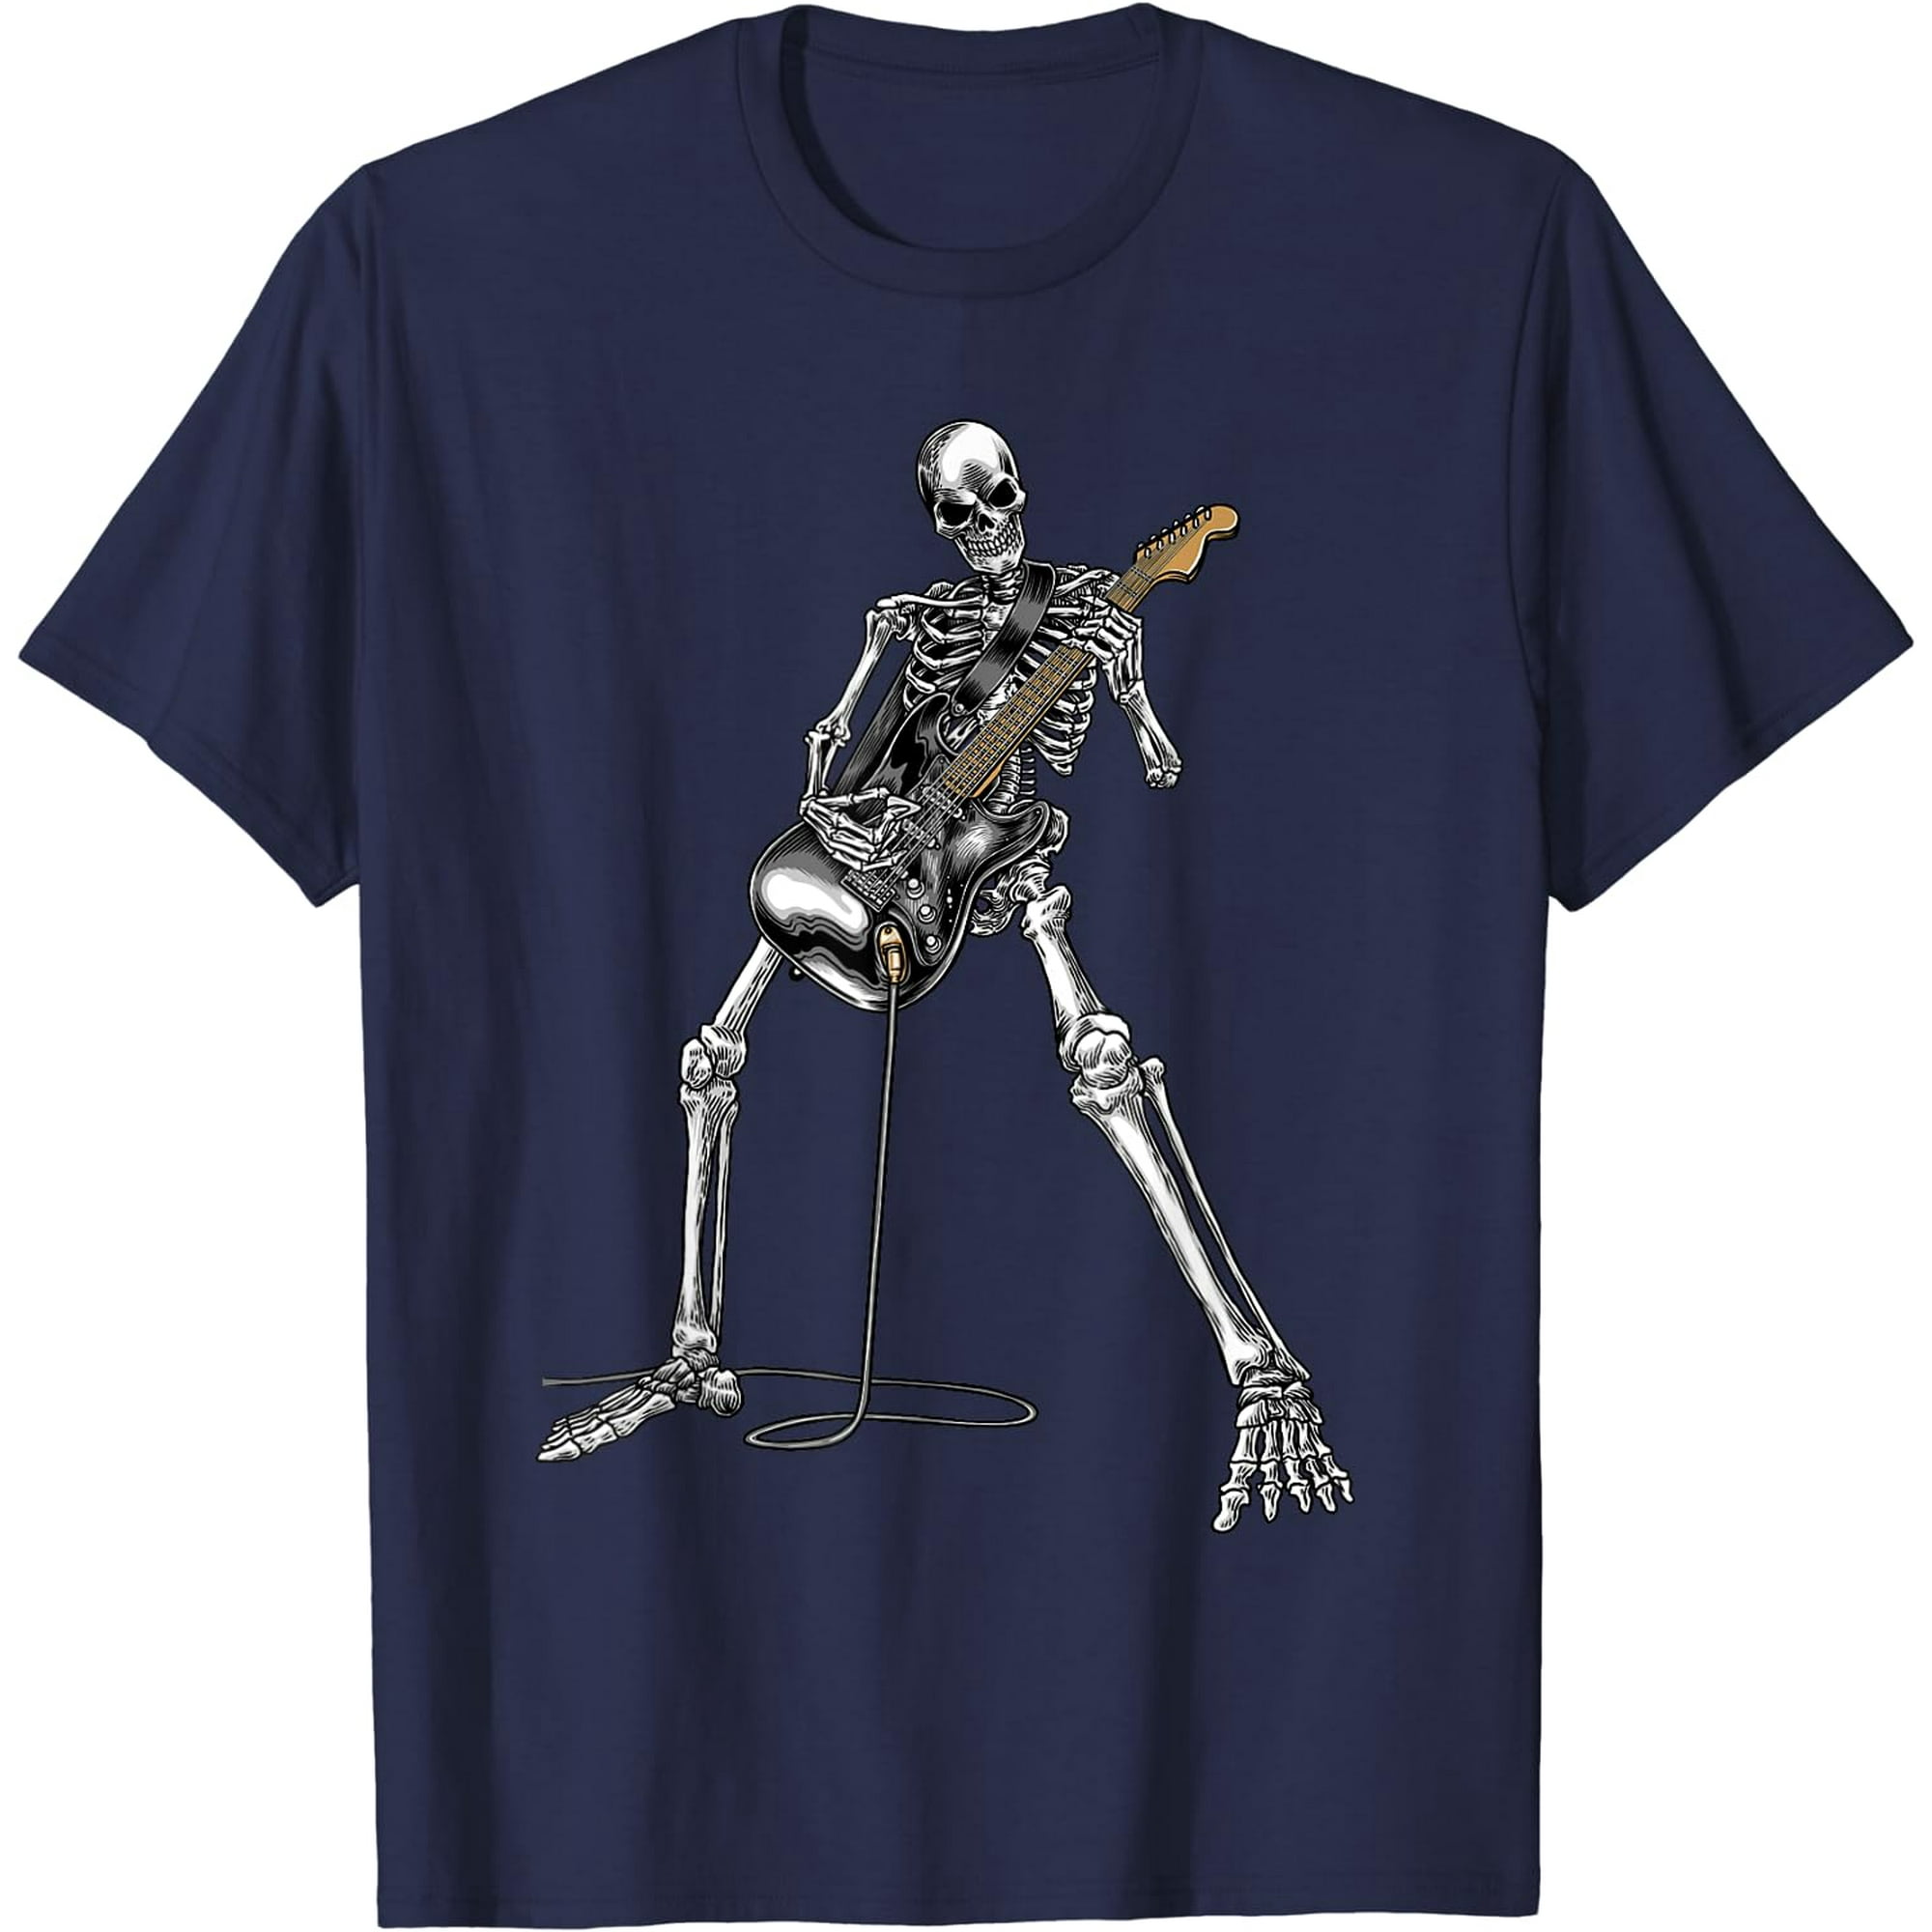 Band Shirts And T Shirts For Men Band Tee T-Shirt Walmart .com